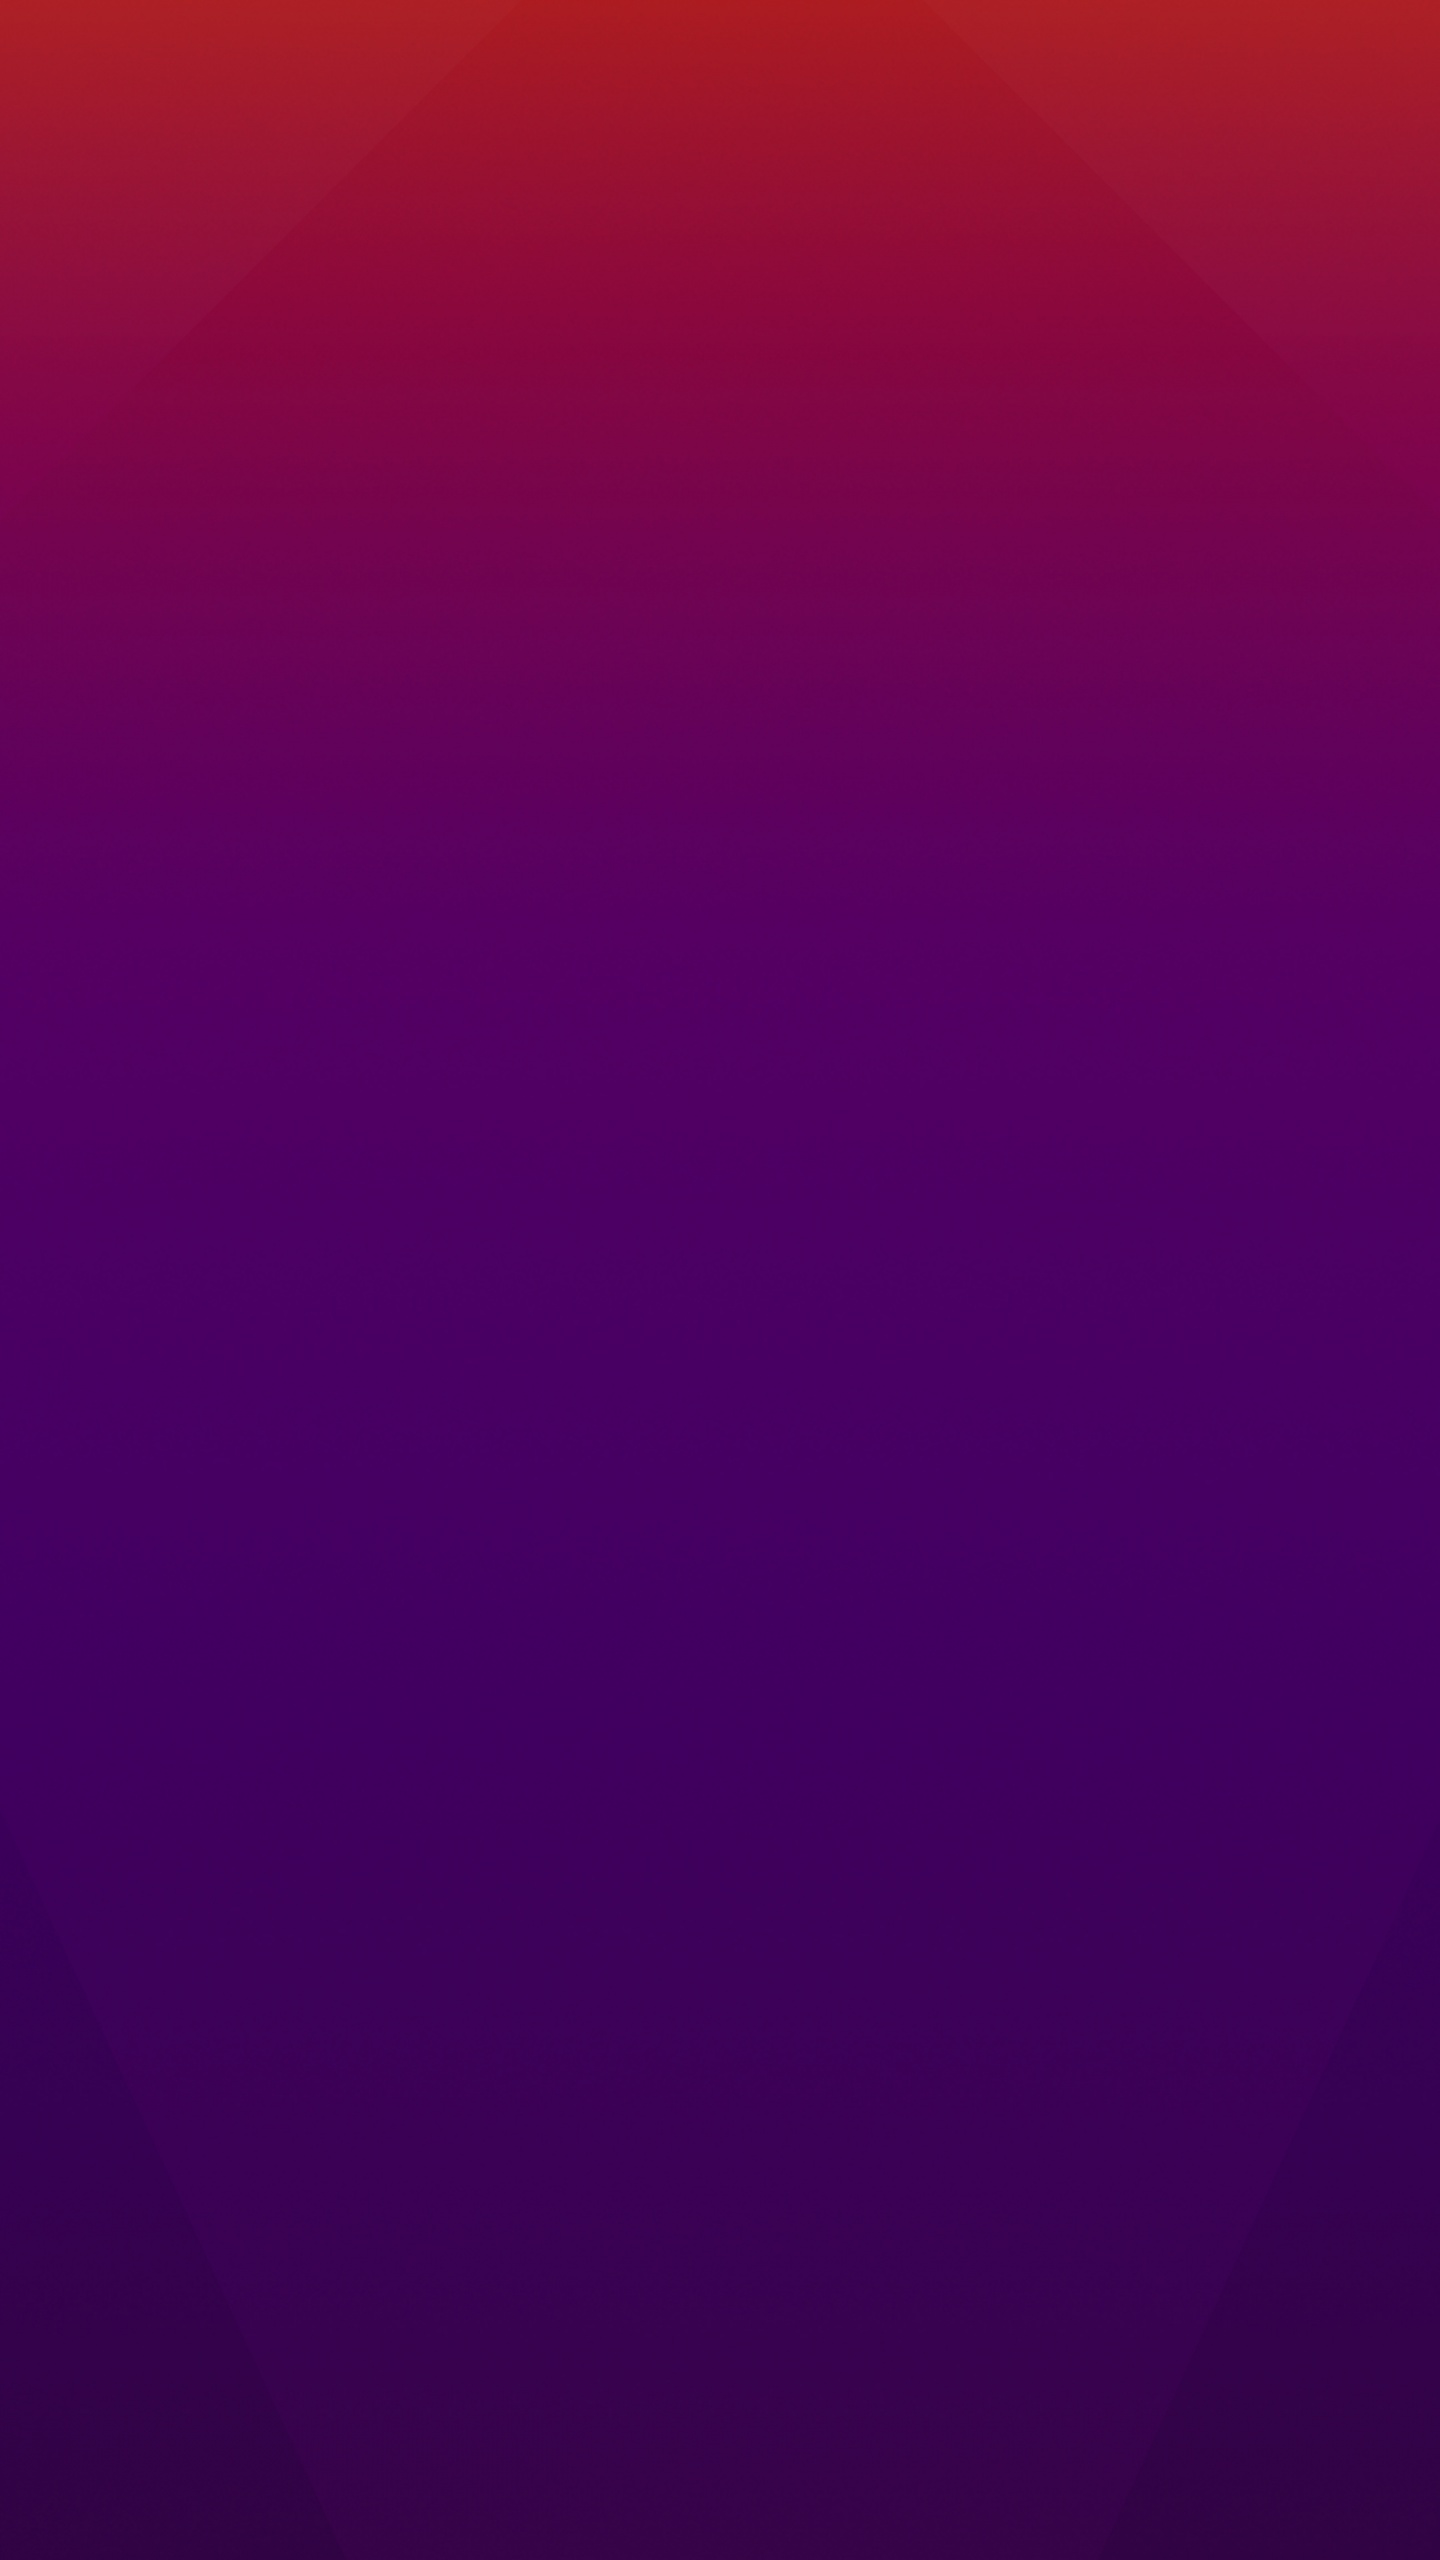 Violet background Wallpaper 4K, Ubuntu Mascot, Stock, Gradients, #3790